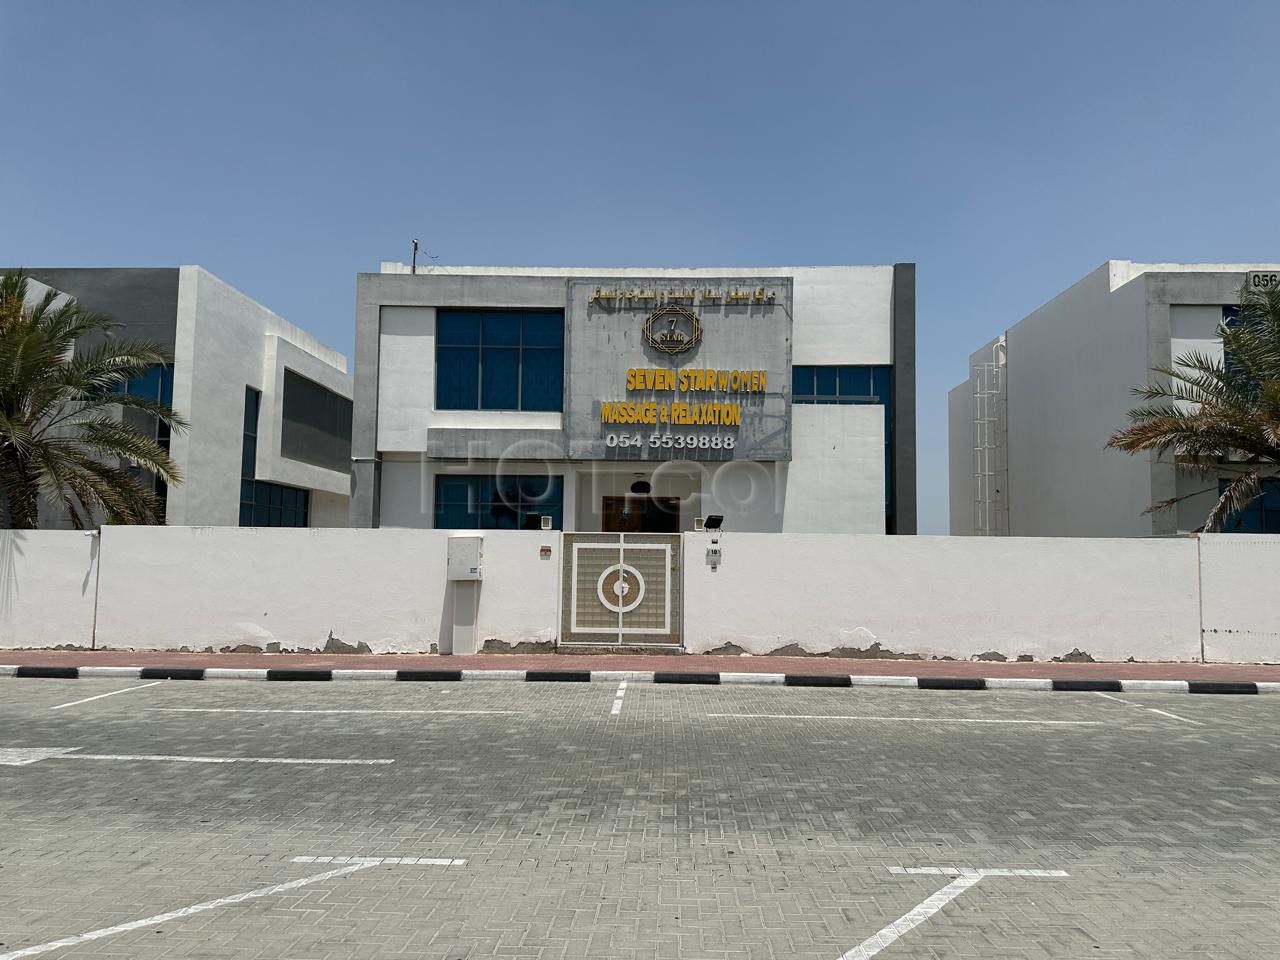 Ajman City, United Arab Emirates Seven Star Massage & Relaxation Center